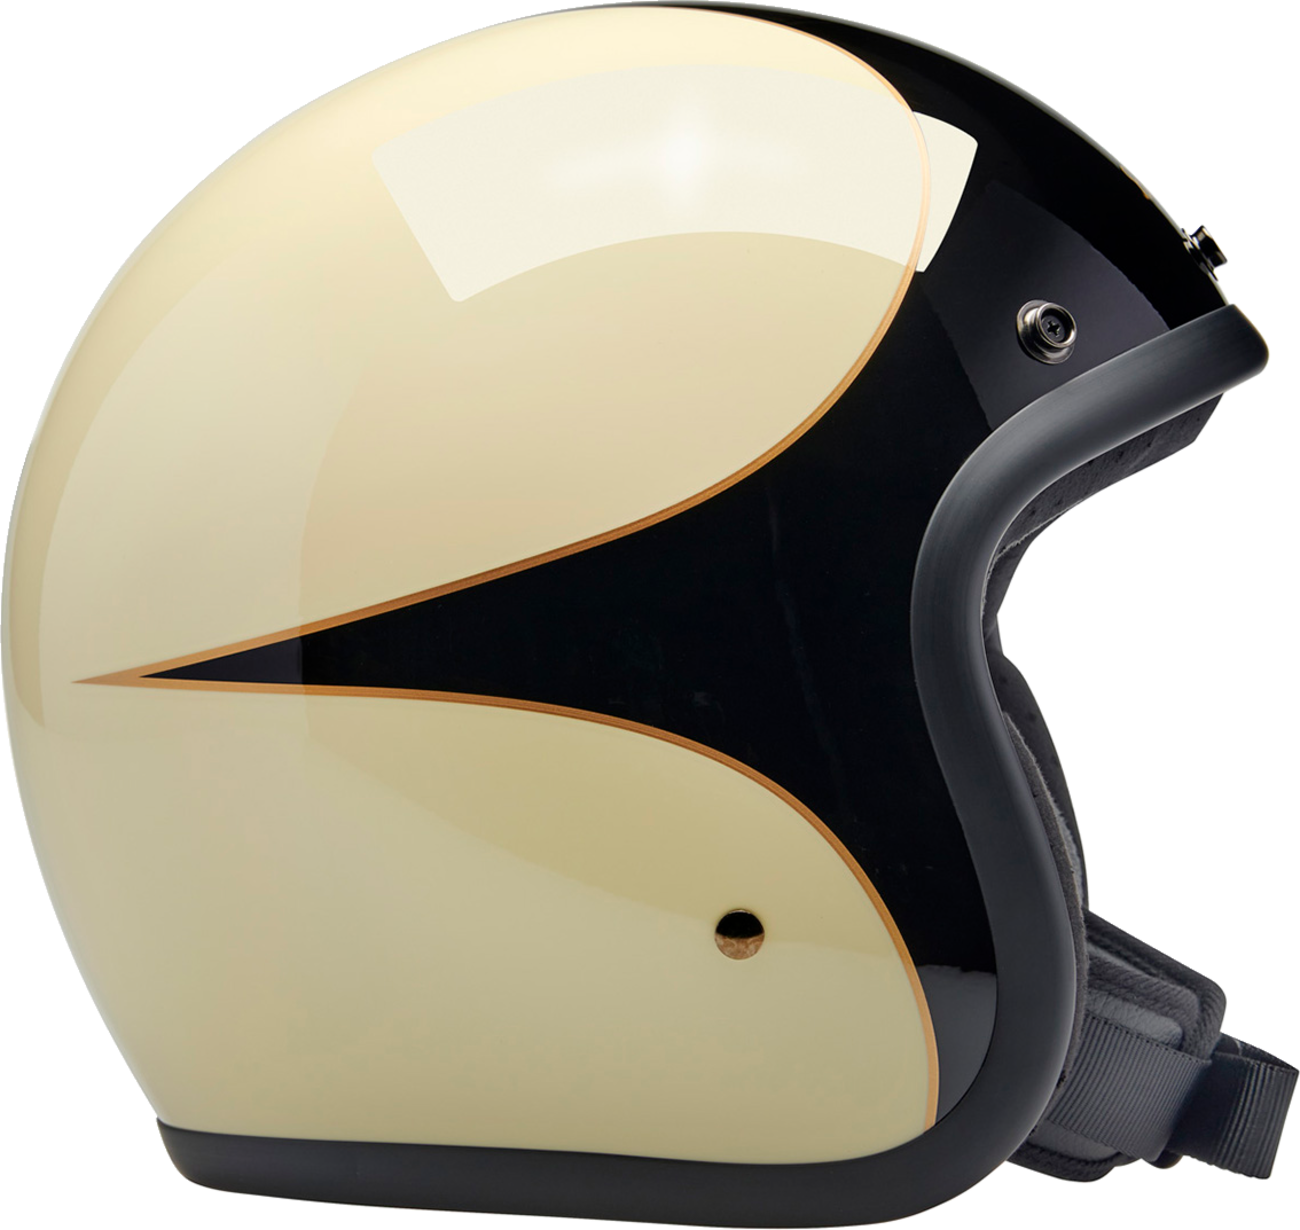 BILTWELL Bonanza Helmet - Gloss Vintage White/Black Scallop - Large 1001-559-204